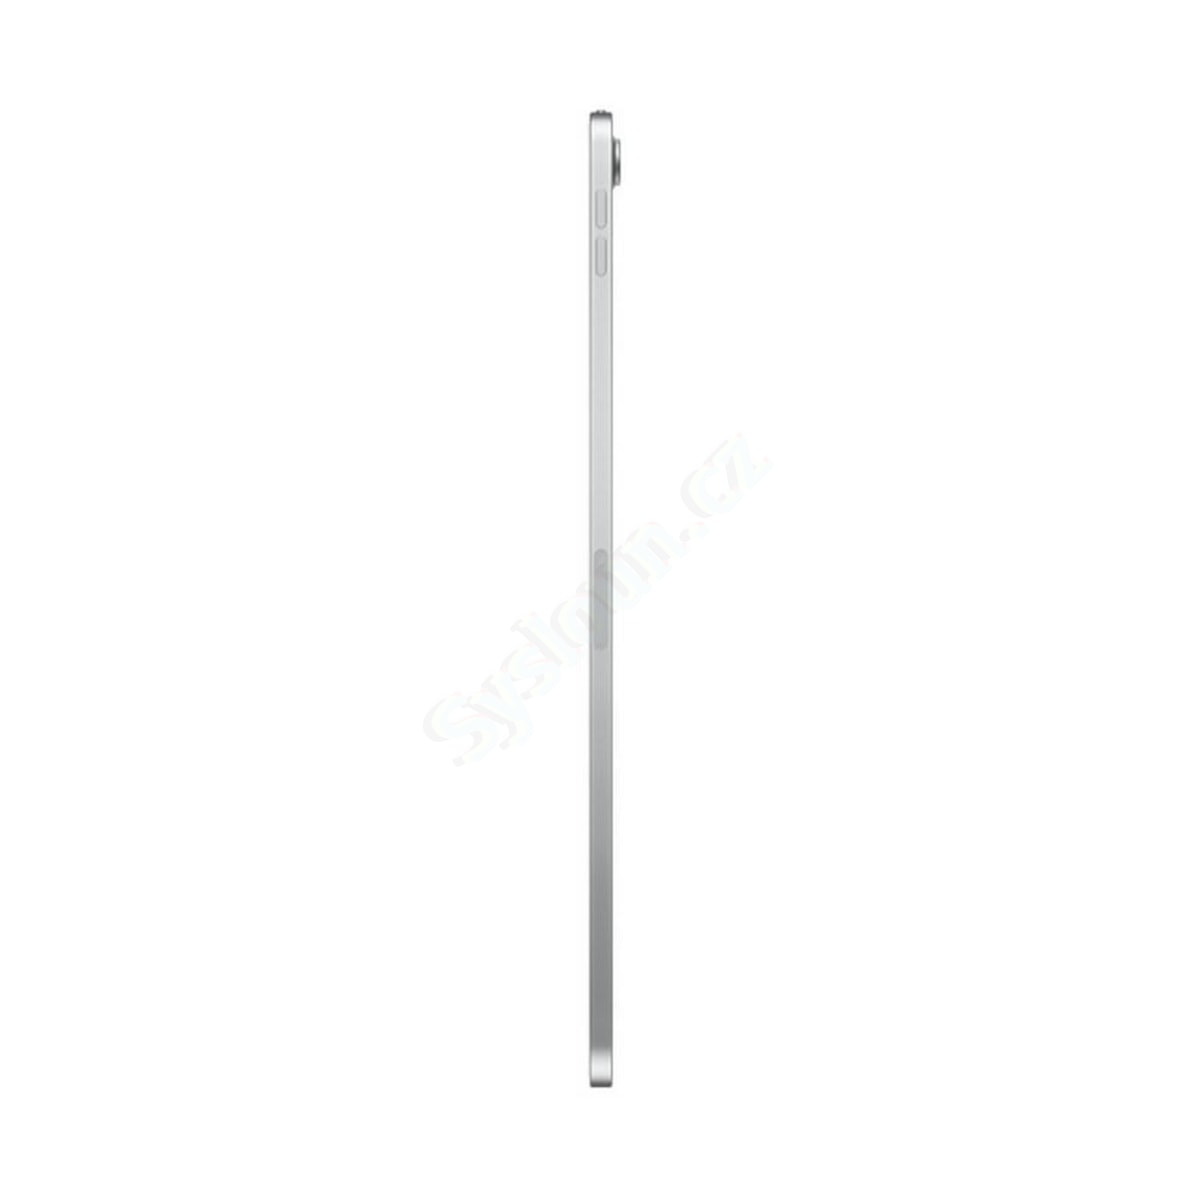 Apple iPad Pro 11" (2018)